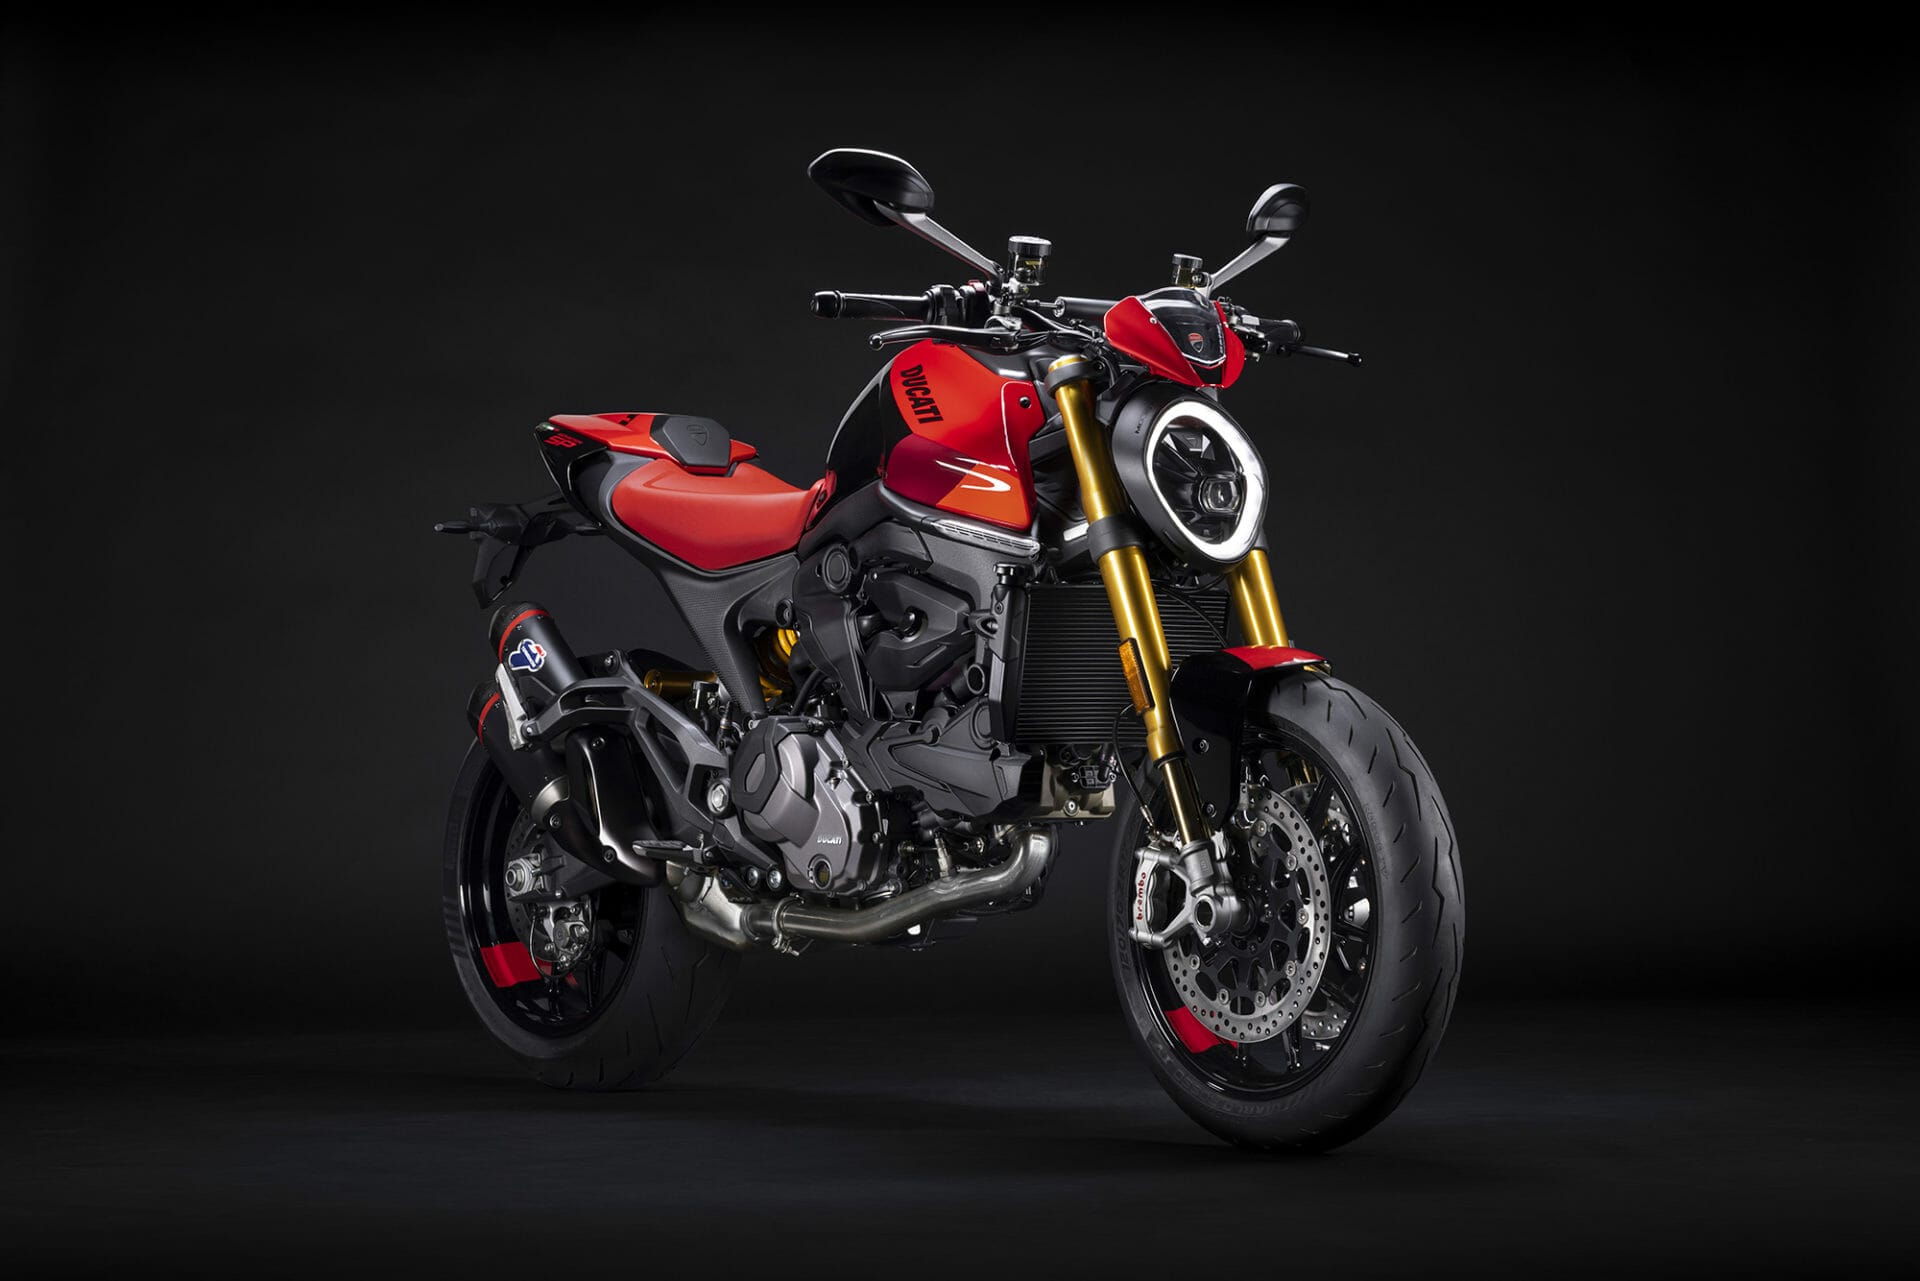 Ducati Monster SP presented - MOTORCYCLES.NEWS